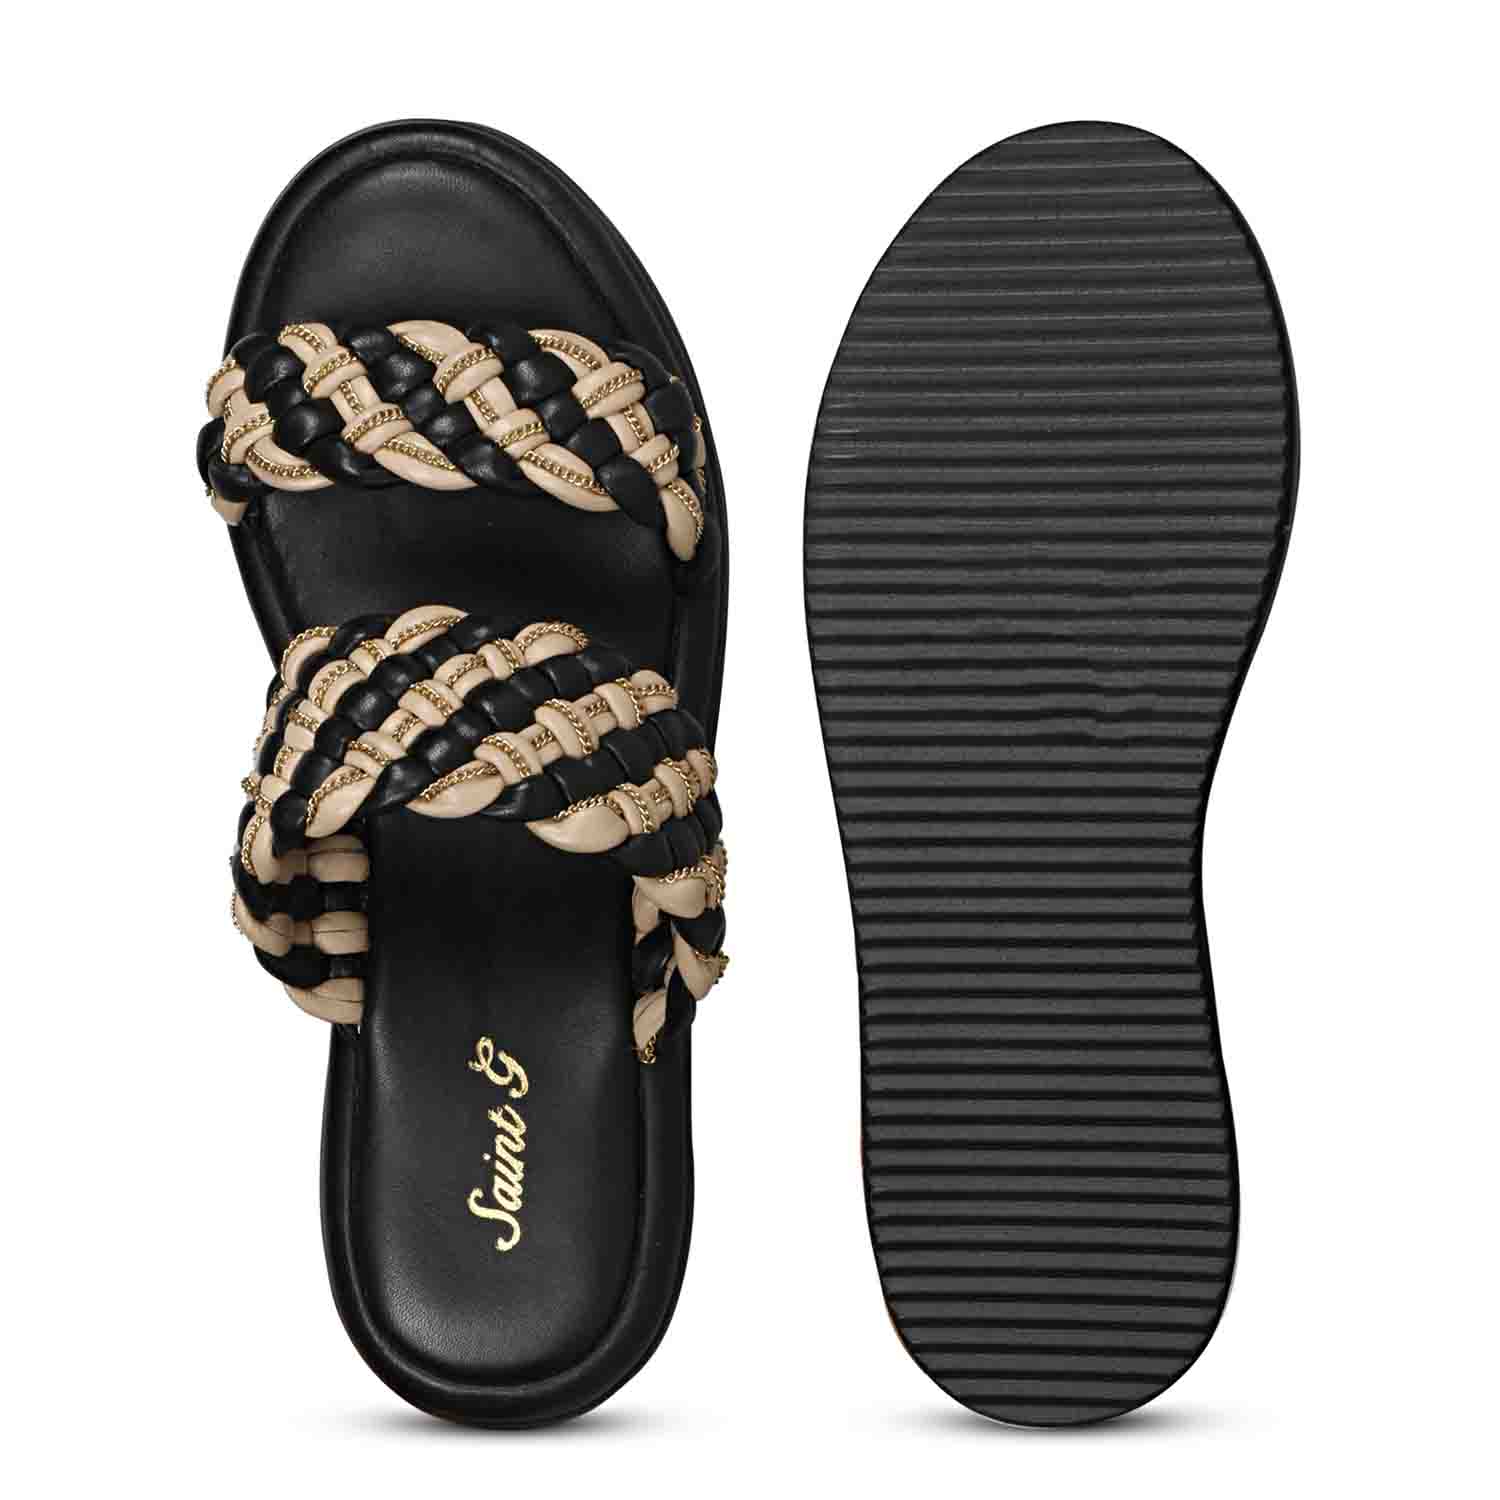 Black platform sandal elastic